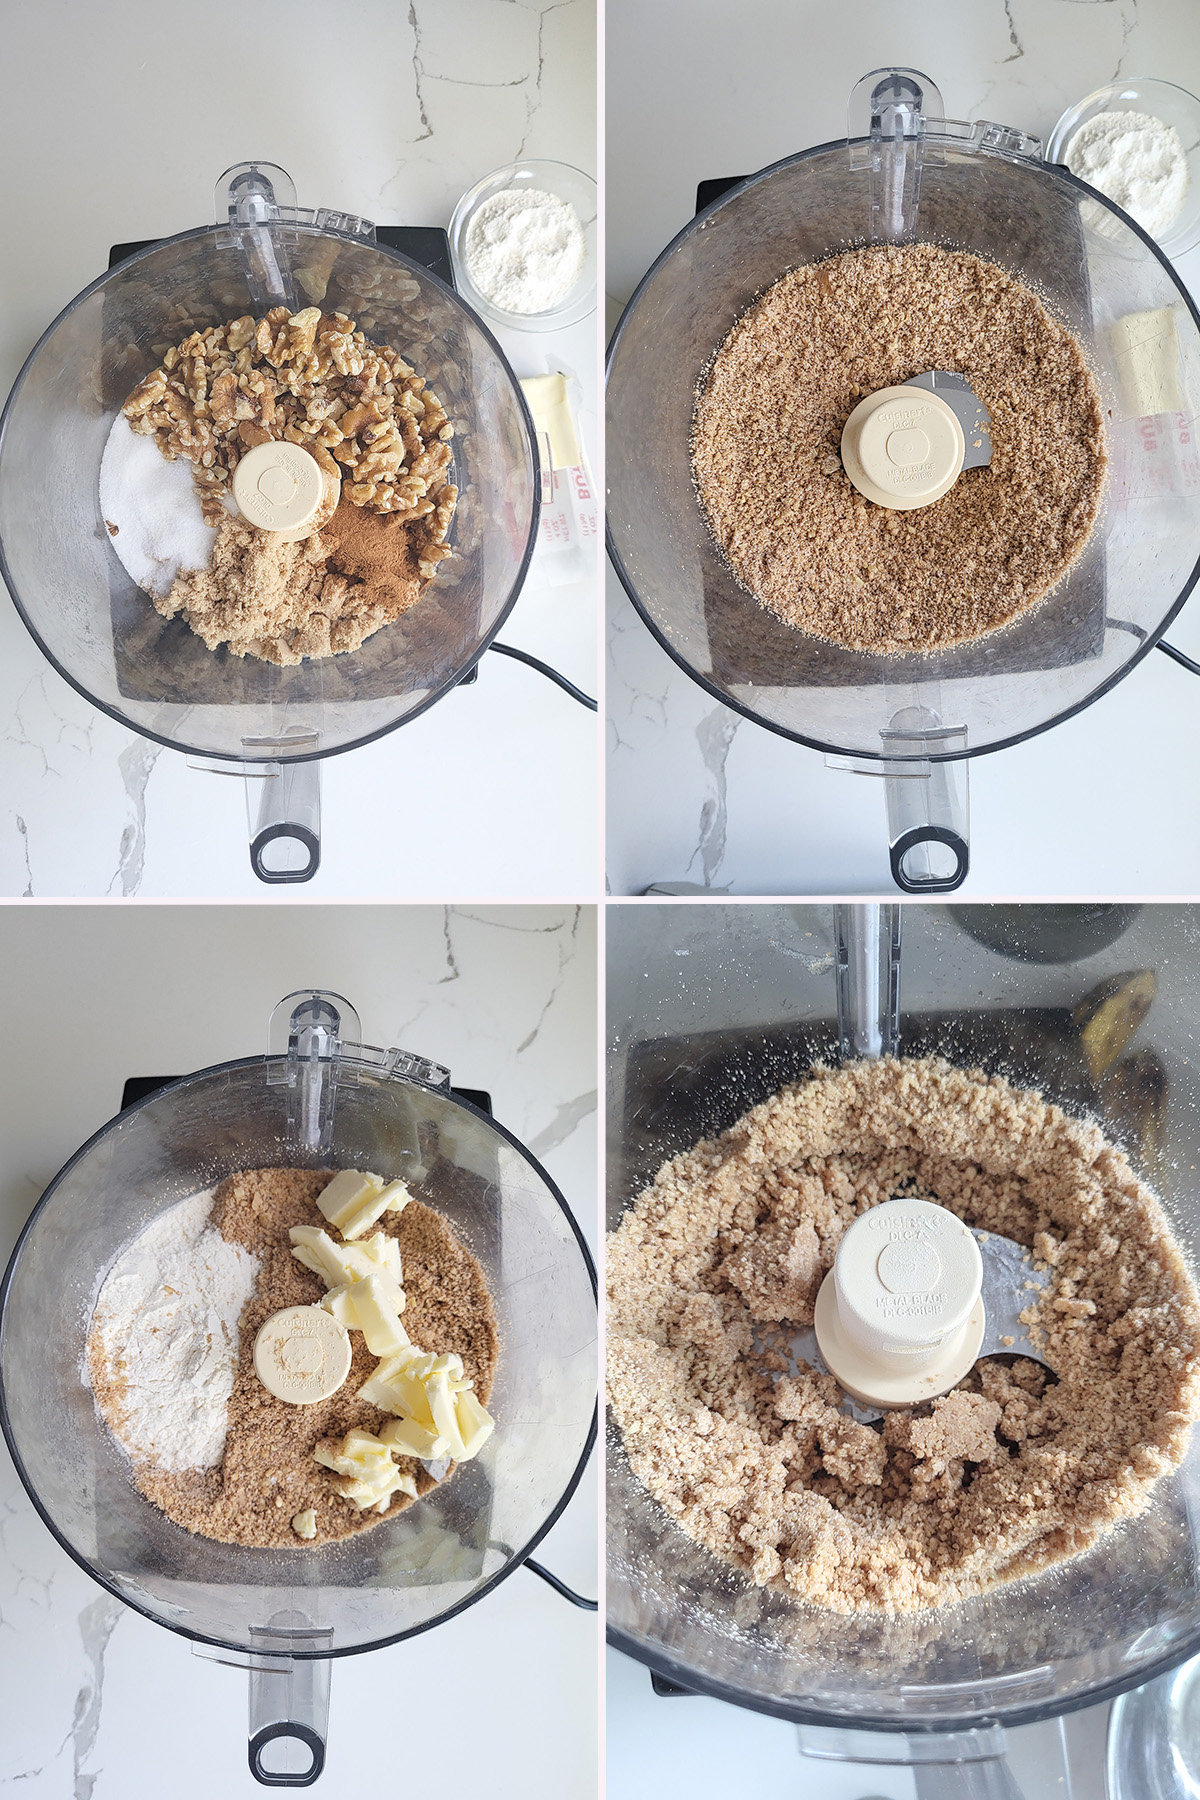 ingredients for walnut streusel in a food processor.